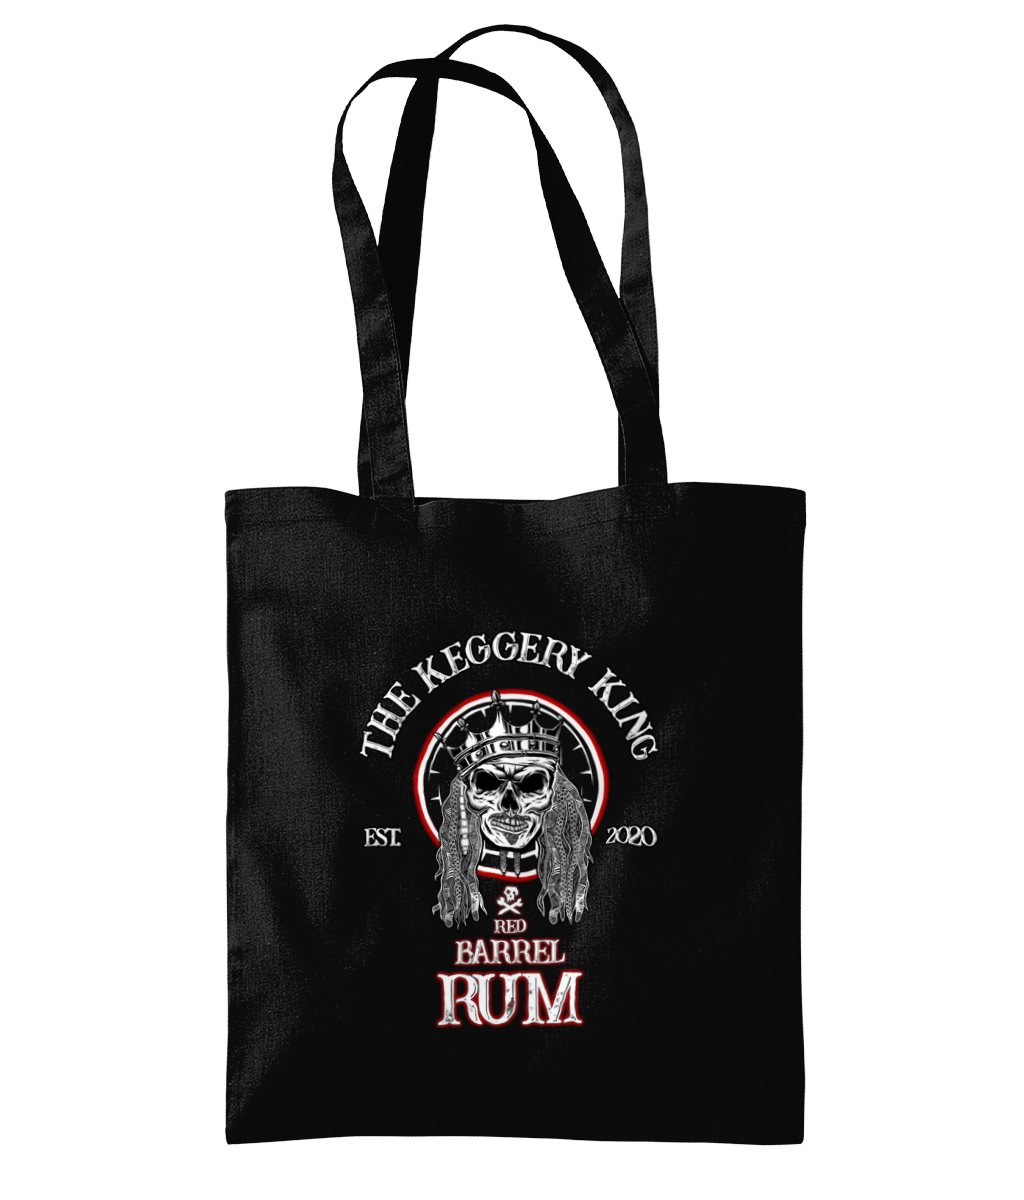 Rob Raven Promo Shoulder Tote Bag 'Red Barrell Rum'